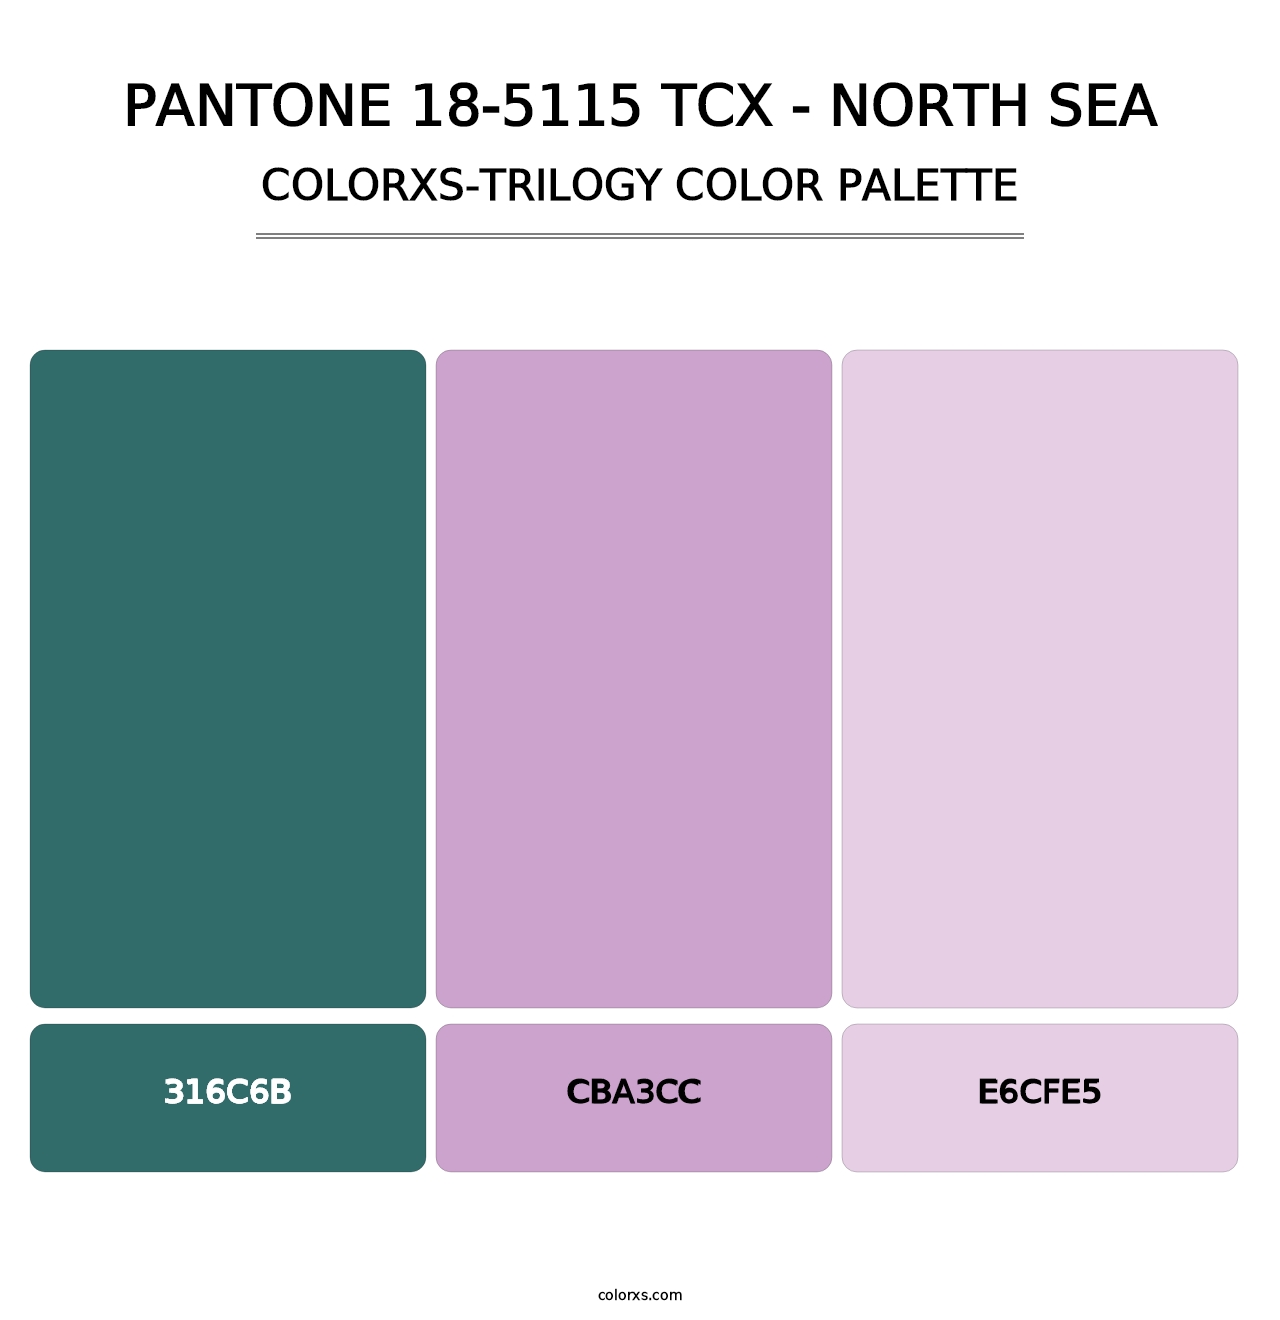 PANTONE 18-5115 TCX - North Sea - Colorxs Trilogy Palette